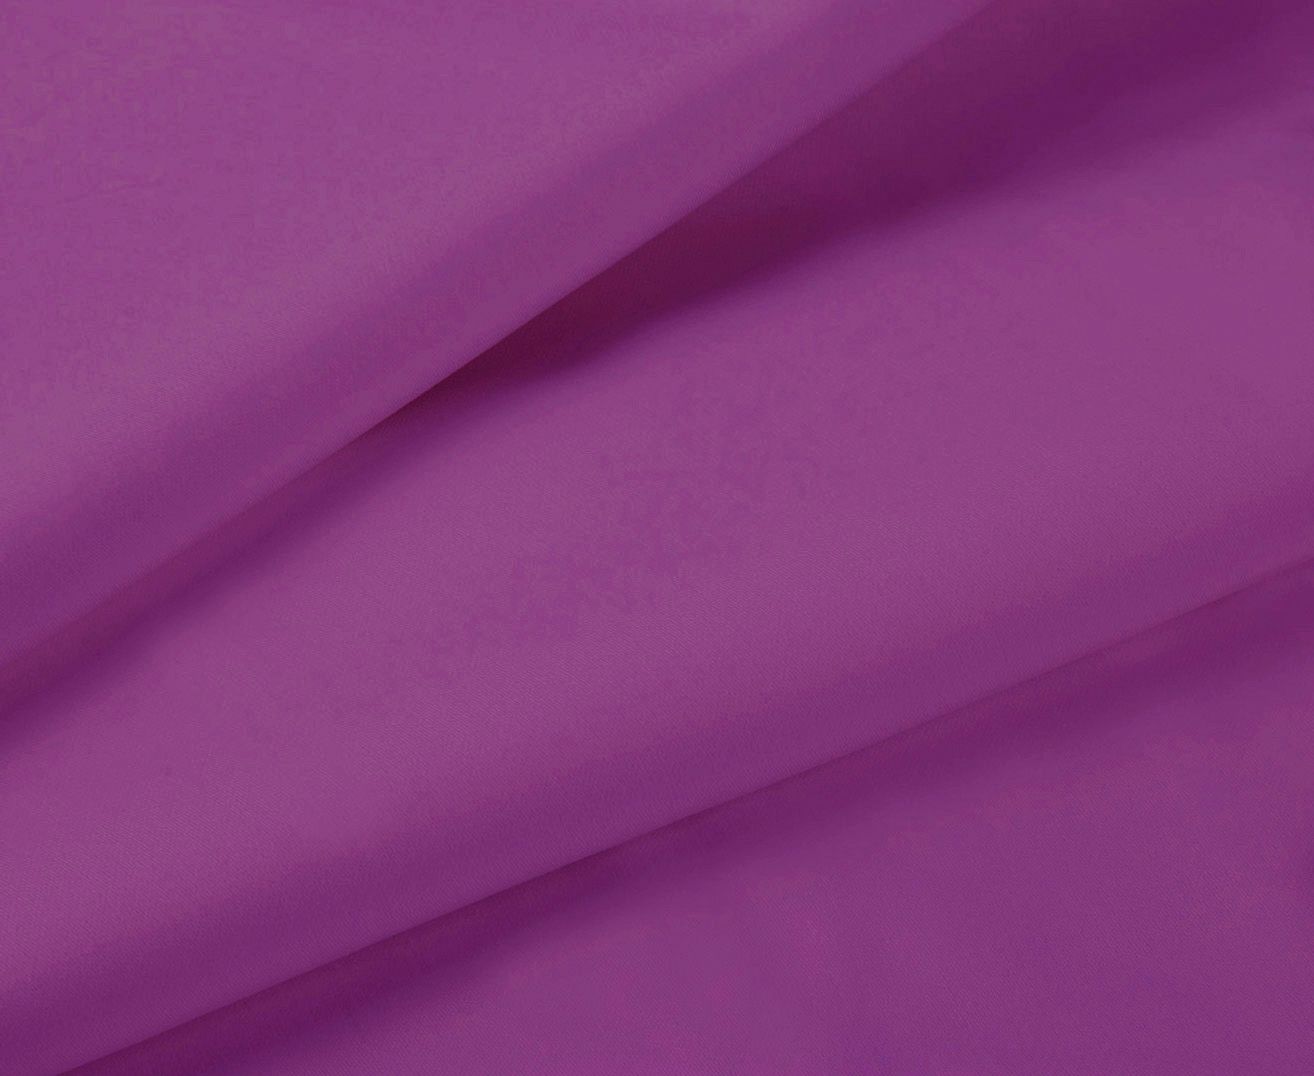 1000TC Ultra Soft Double Size Bed Purple Flat & Fitted Sheet Set - Newstart Furniture